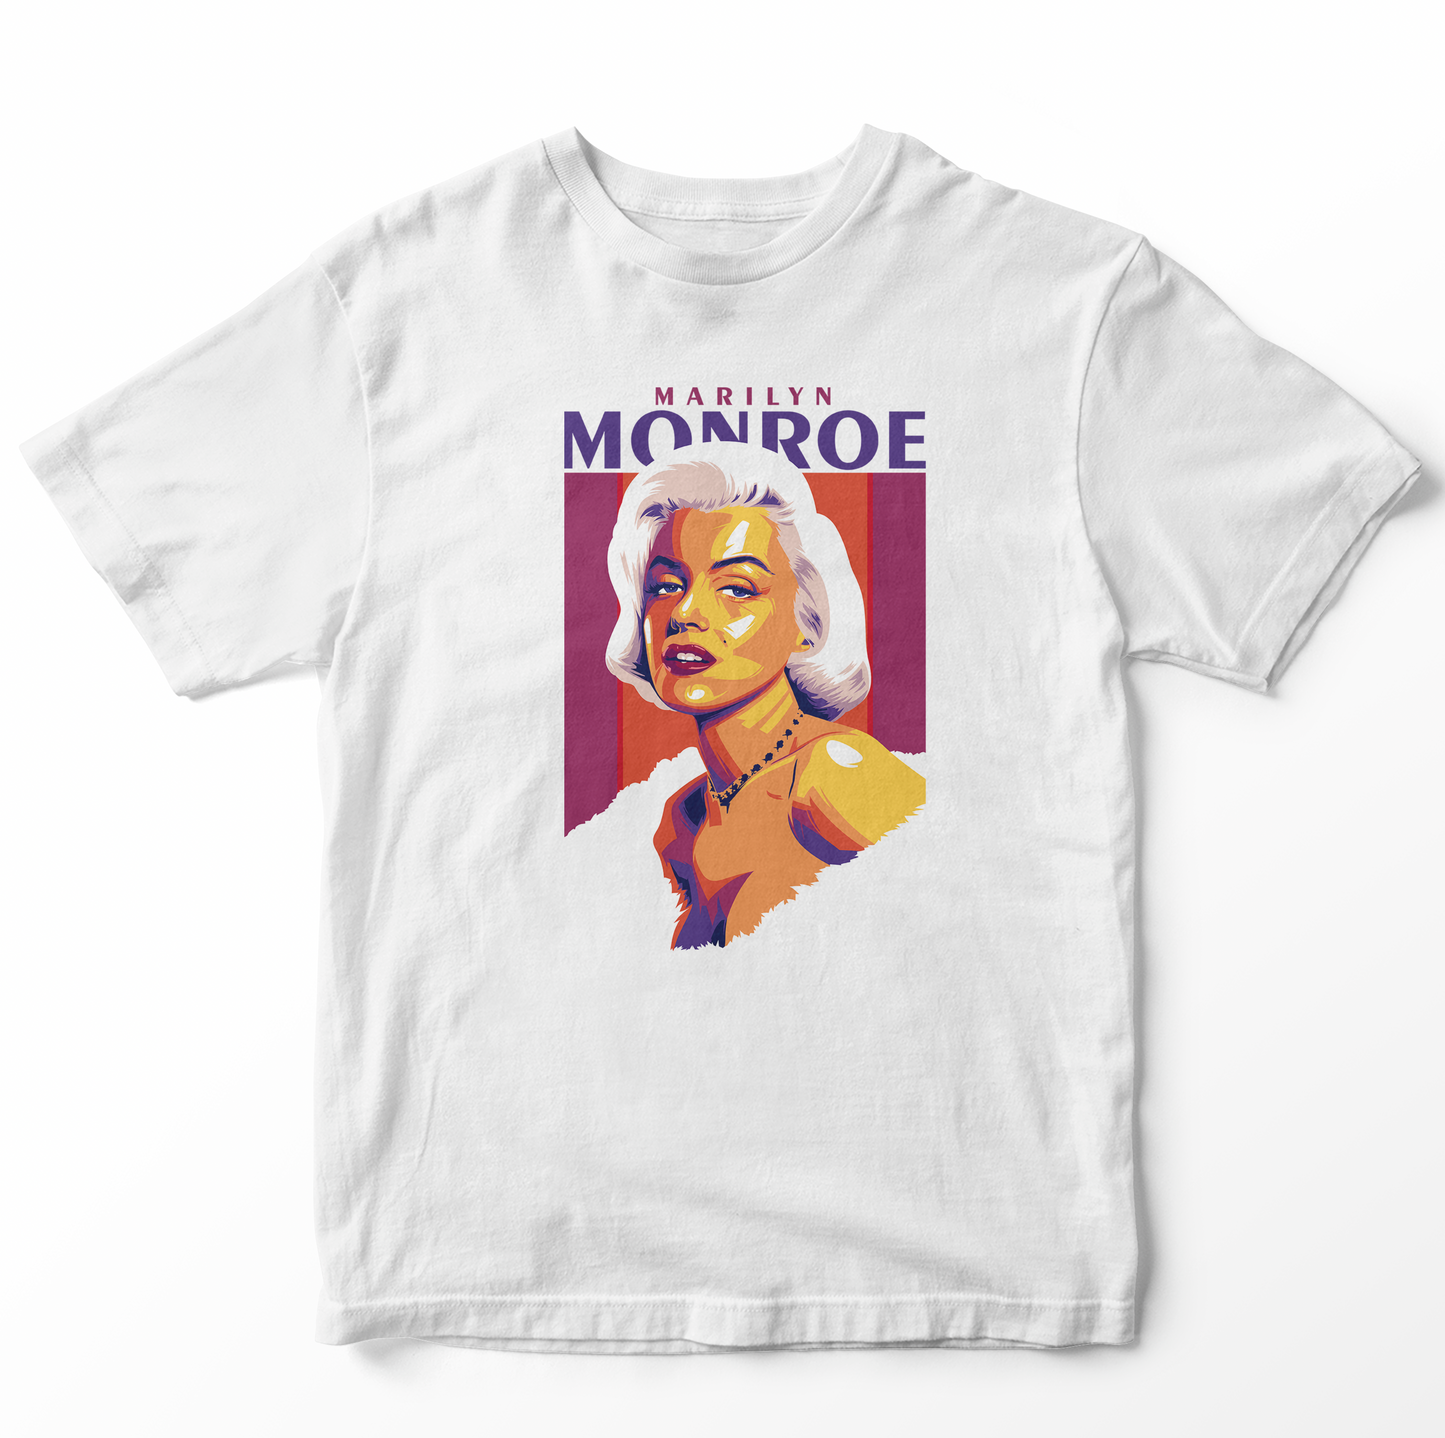 Miss Monroe Tribute Adult Unisex Shirt